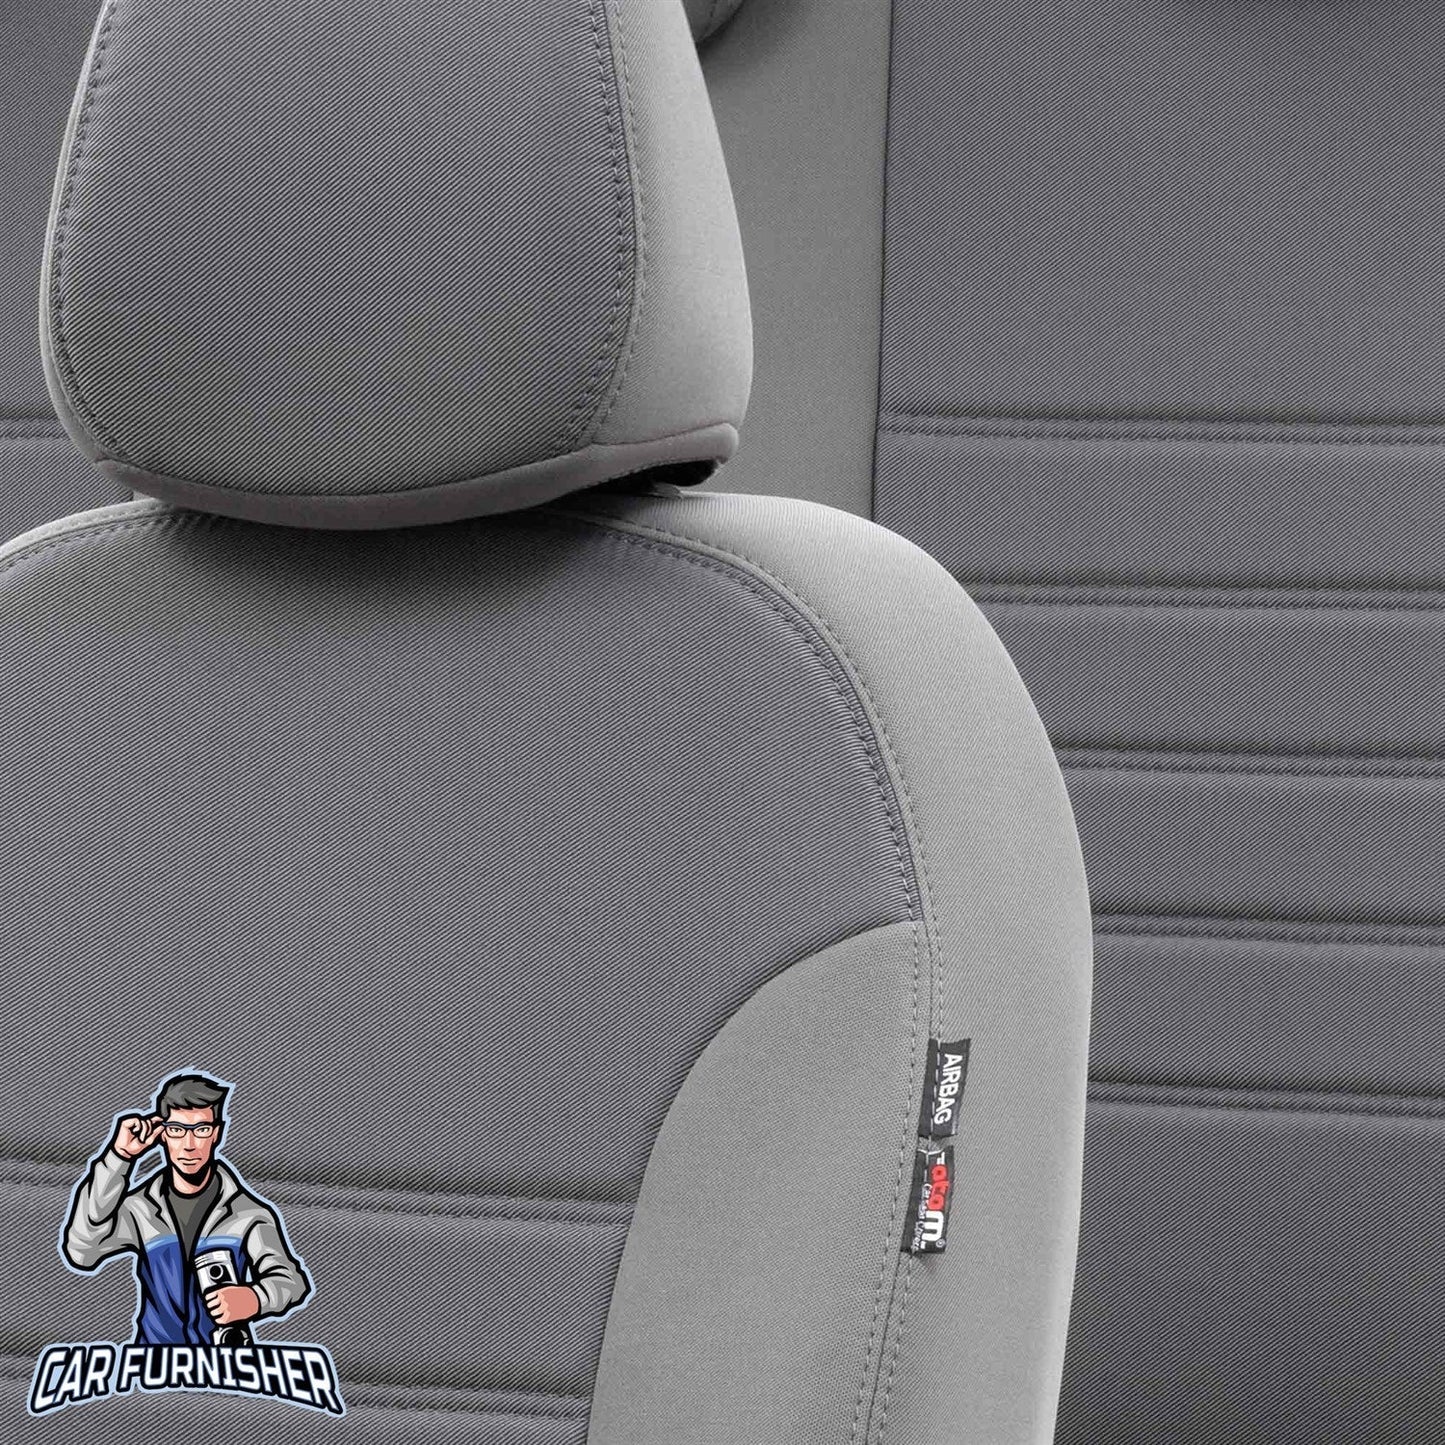 Kia Venga Seat Cover Original Jacquard Design Gray Jacquard Fabric